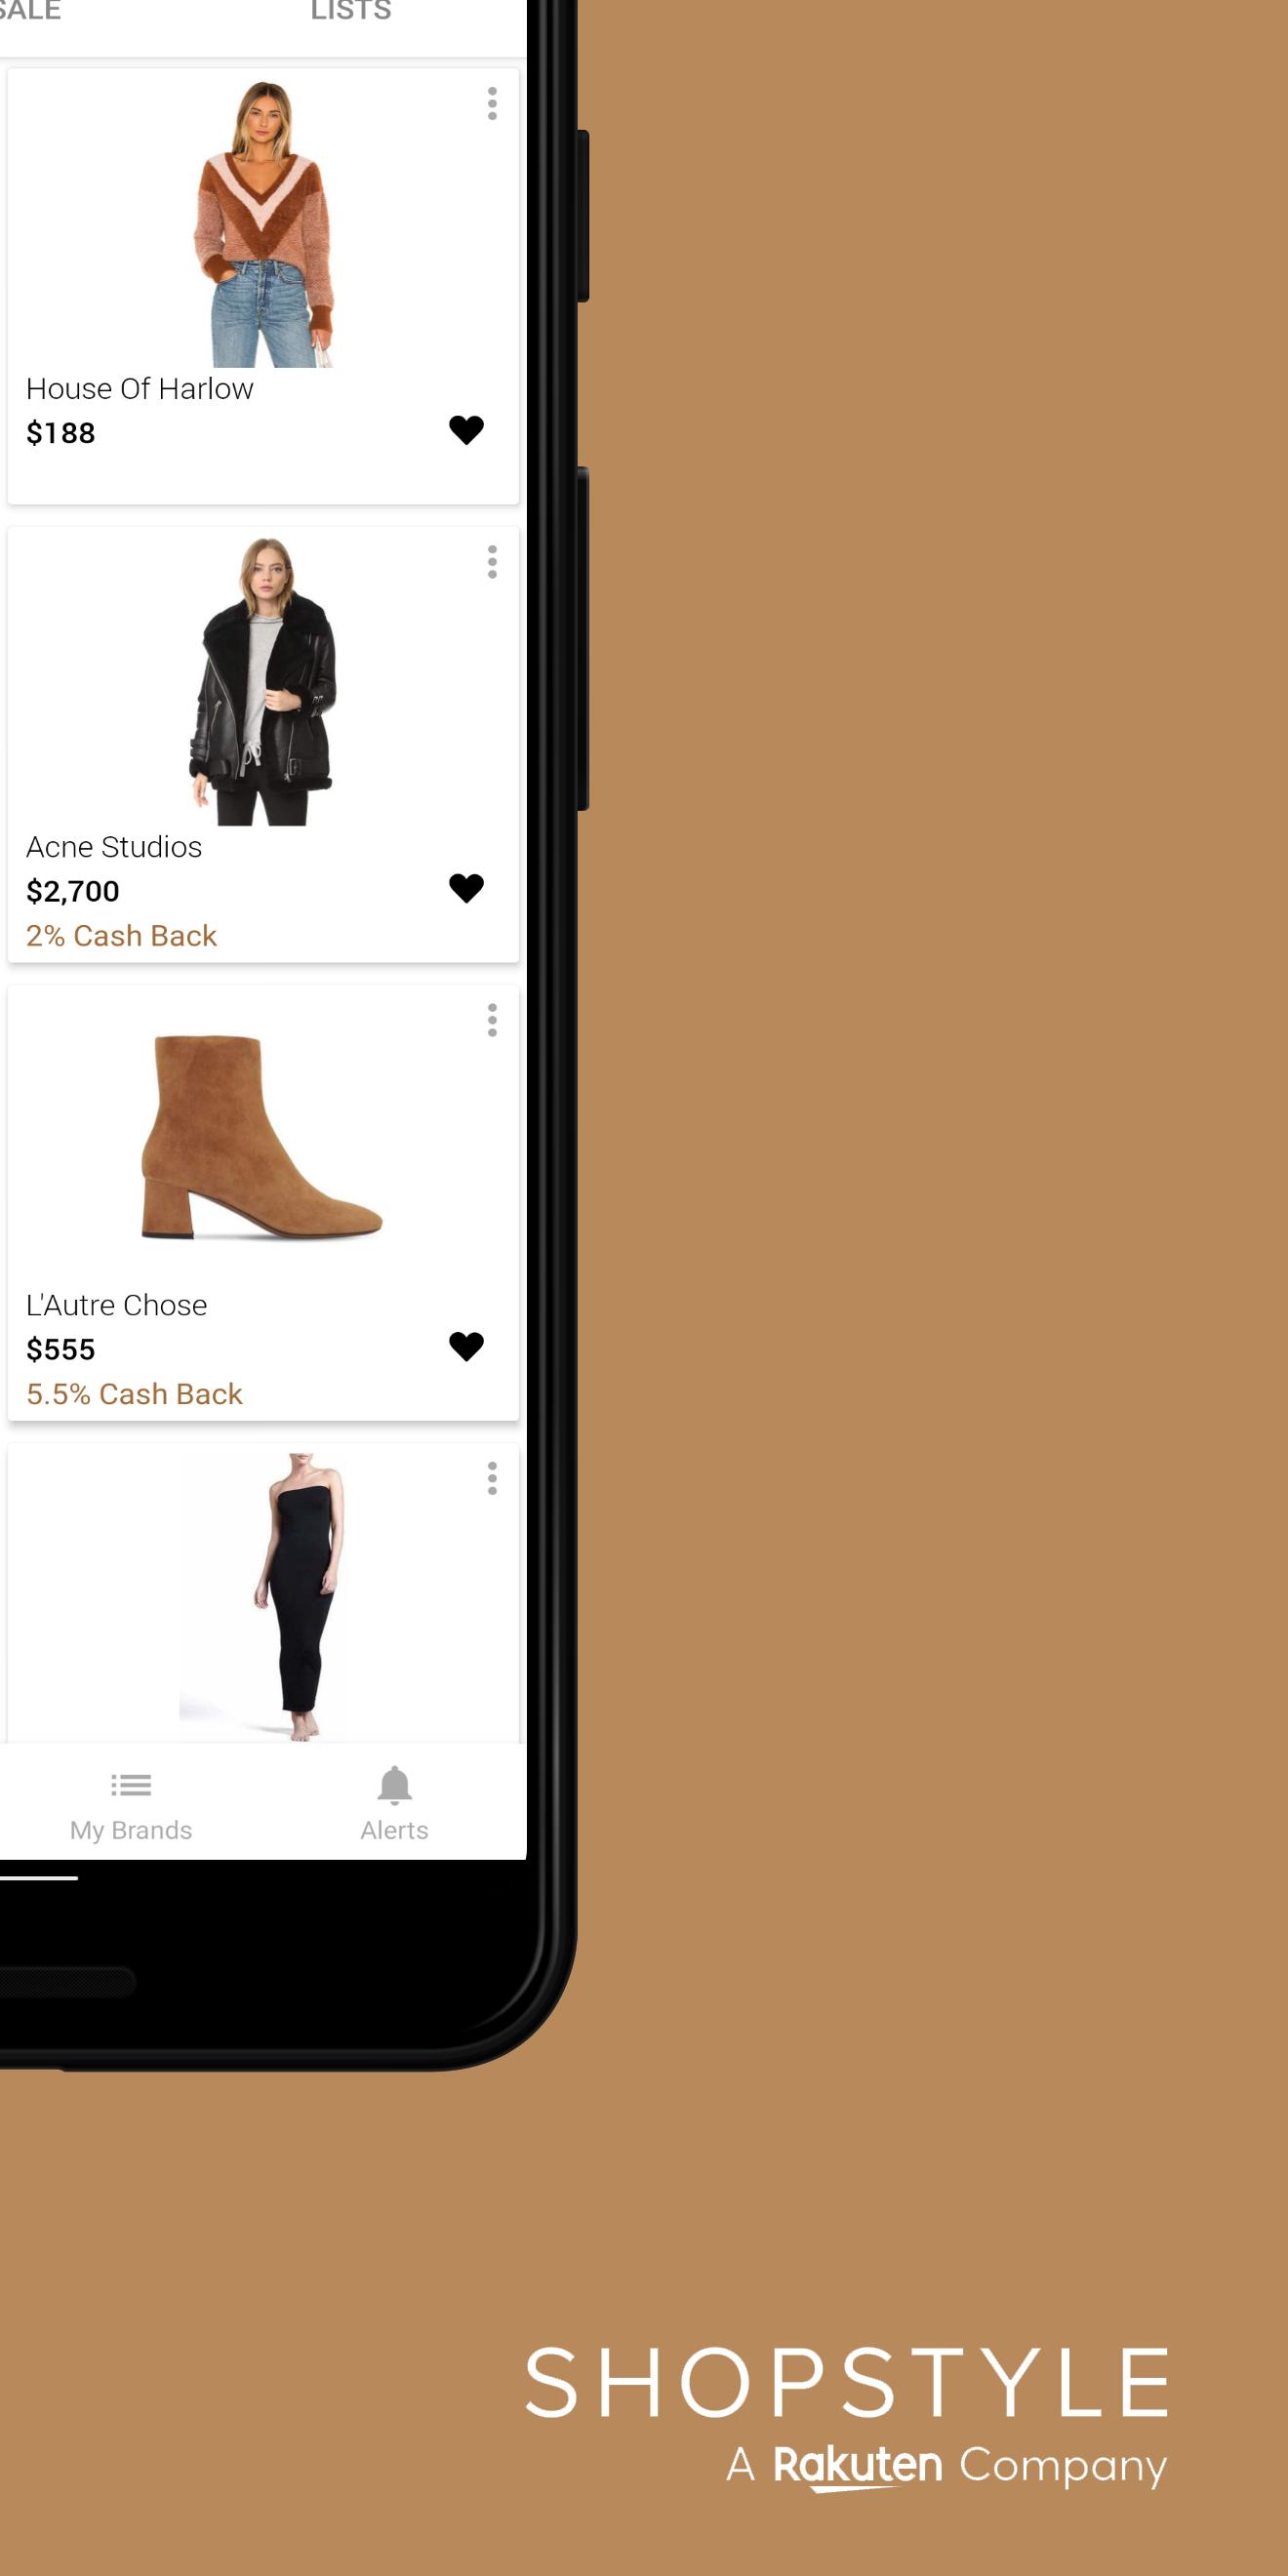 ShopStyle Fashion & Cash Back 8.0.2 Screenshot 4